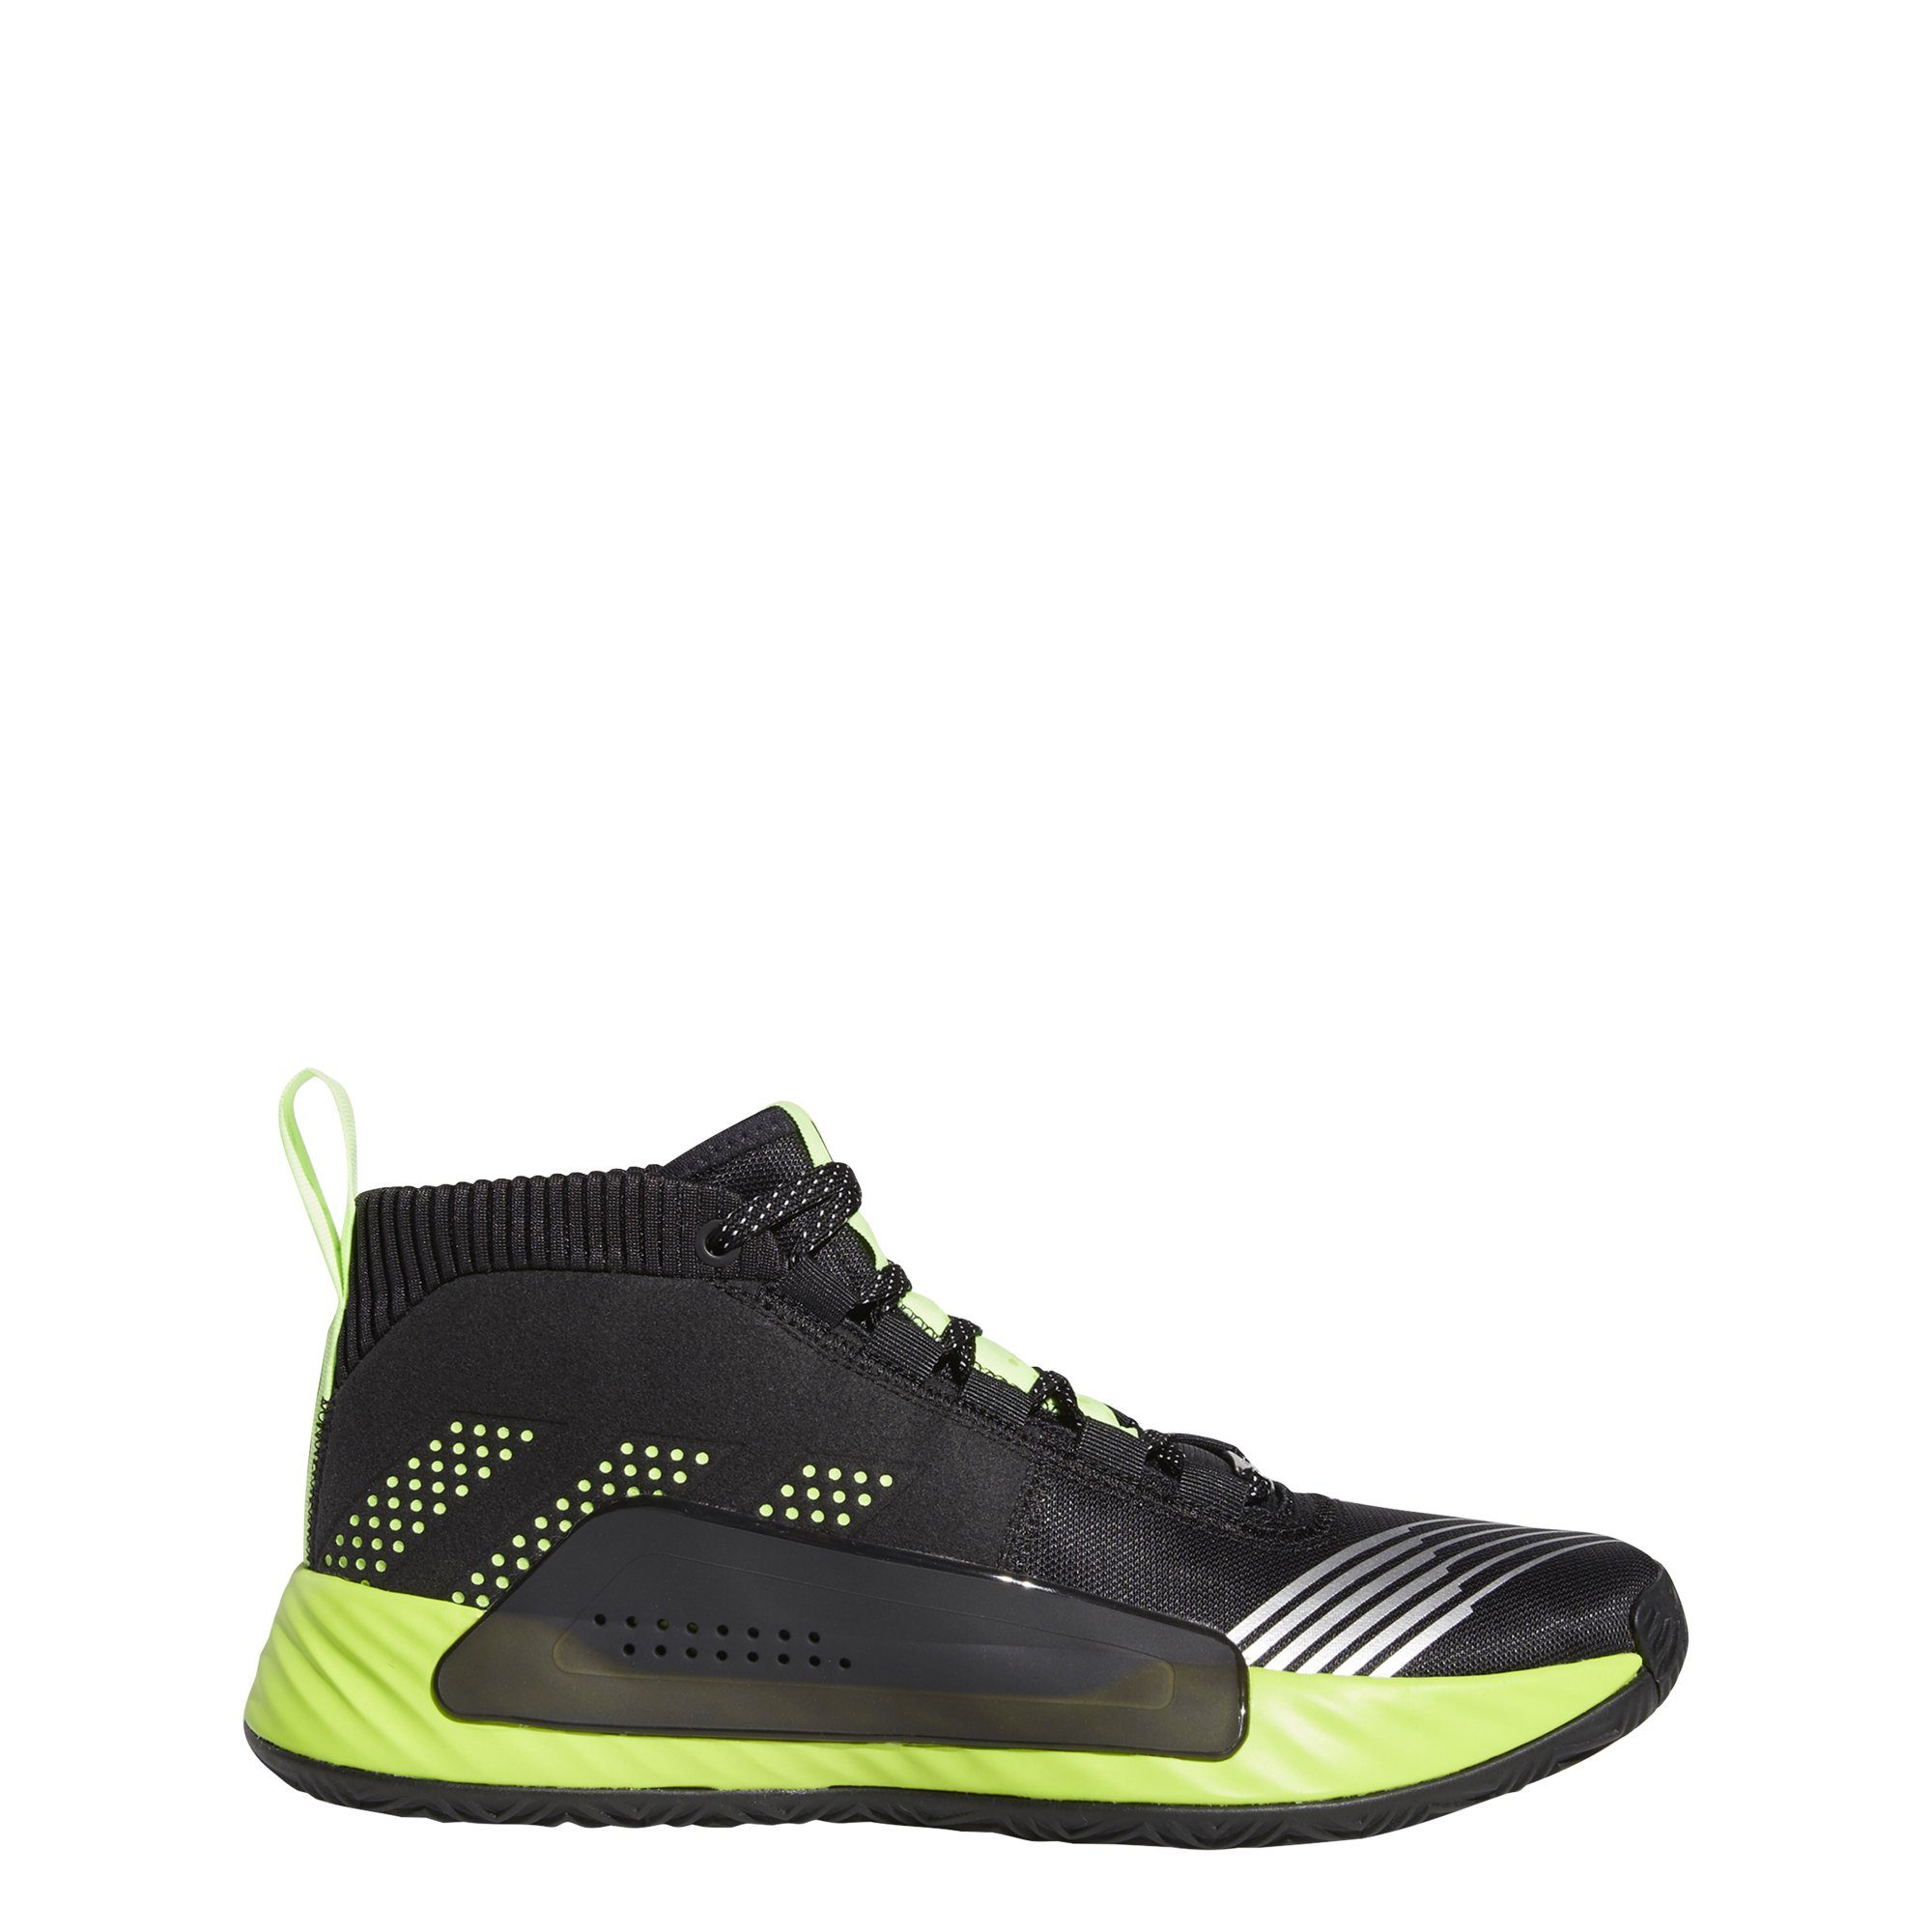 Adidas Basketball x Wars 5 Lightsaber Green Men EH2457 (Fast shipping) - adidas gazelle ballerina shoes amazon HotelomegaShops